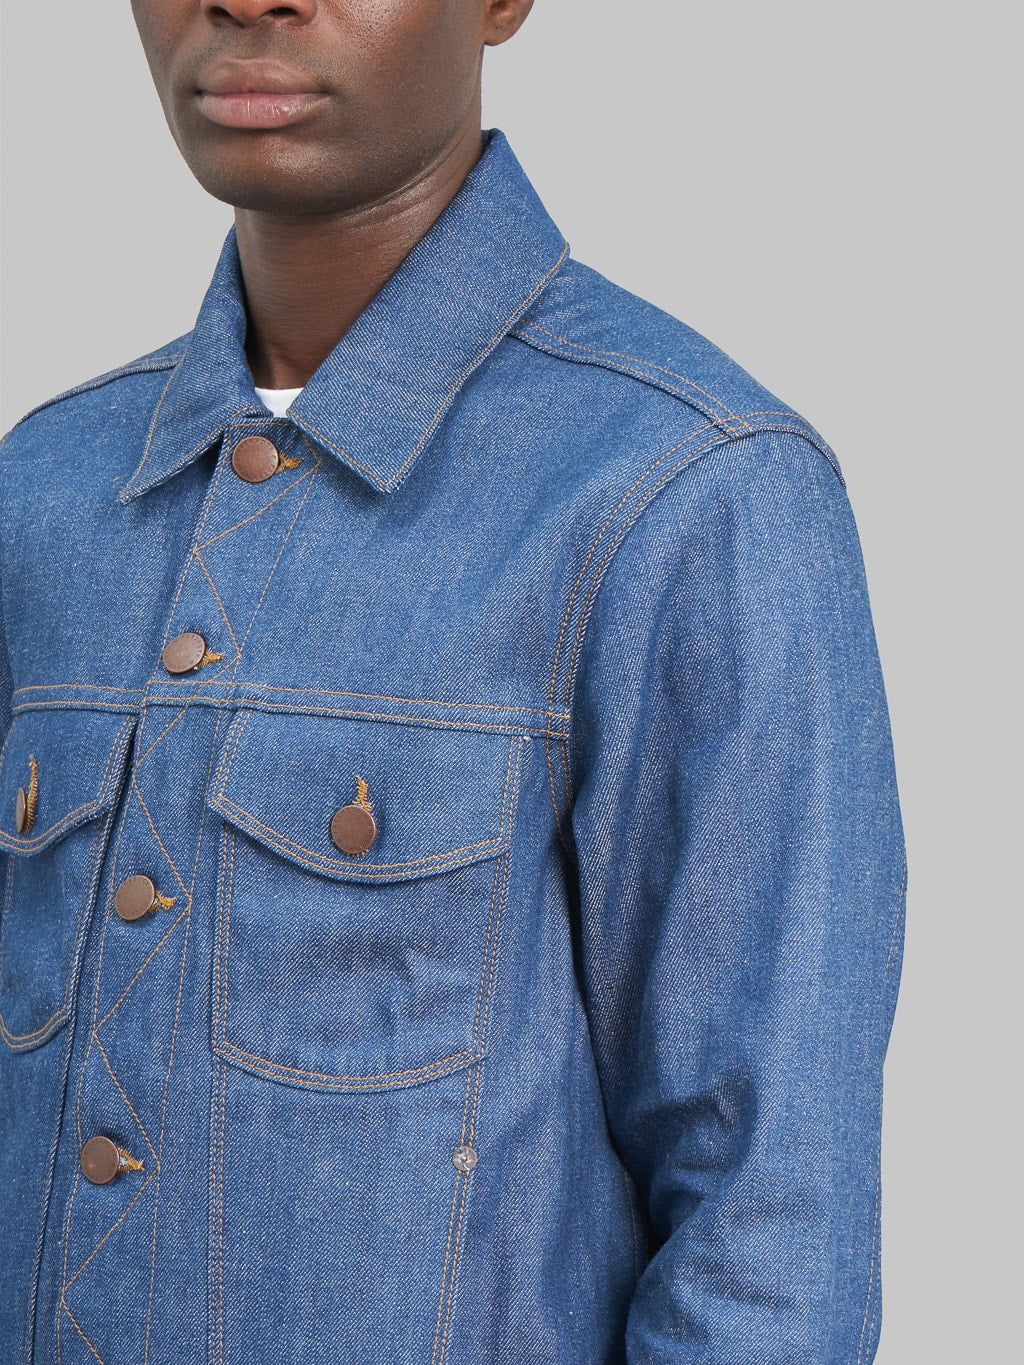 freenote cloth classic denim jacket vintage blue denim  front details